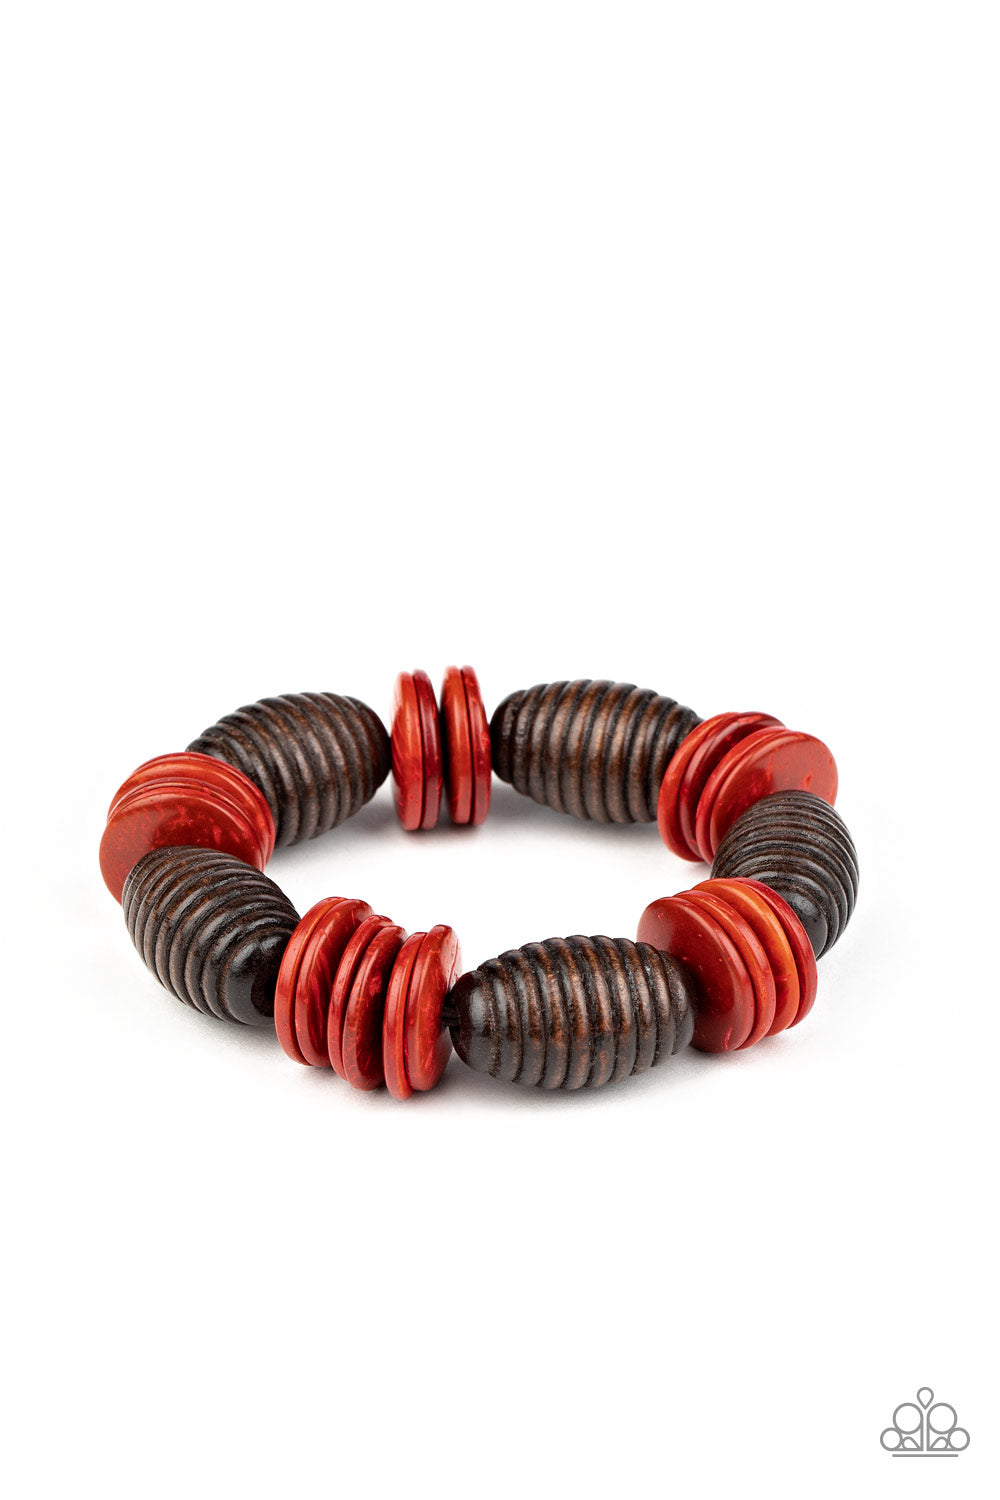 Caribbean Castaway - Red/Brown wood bracelet